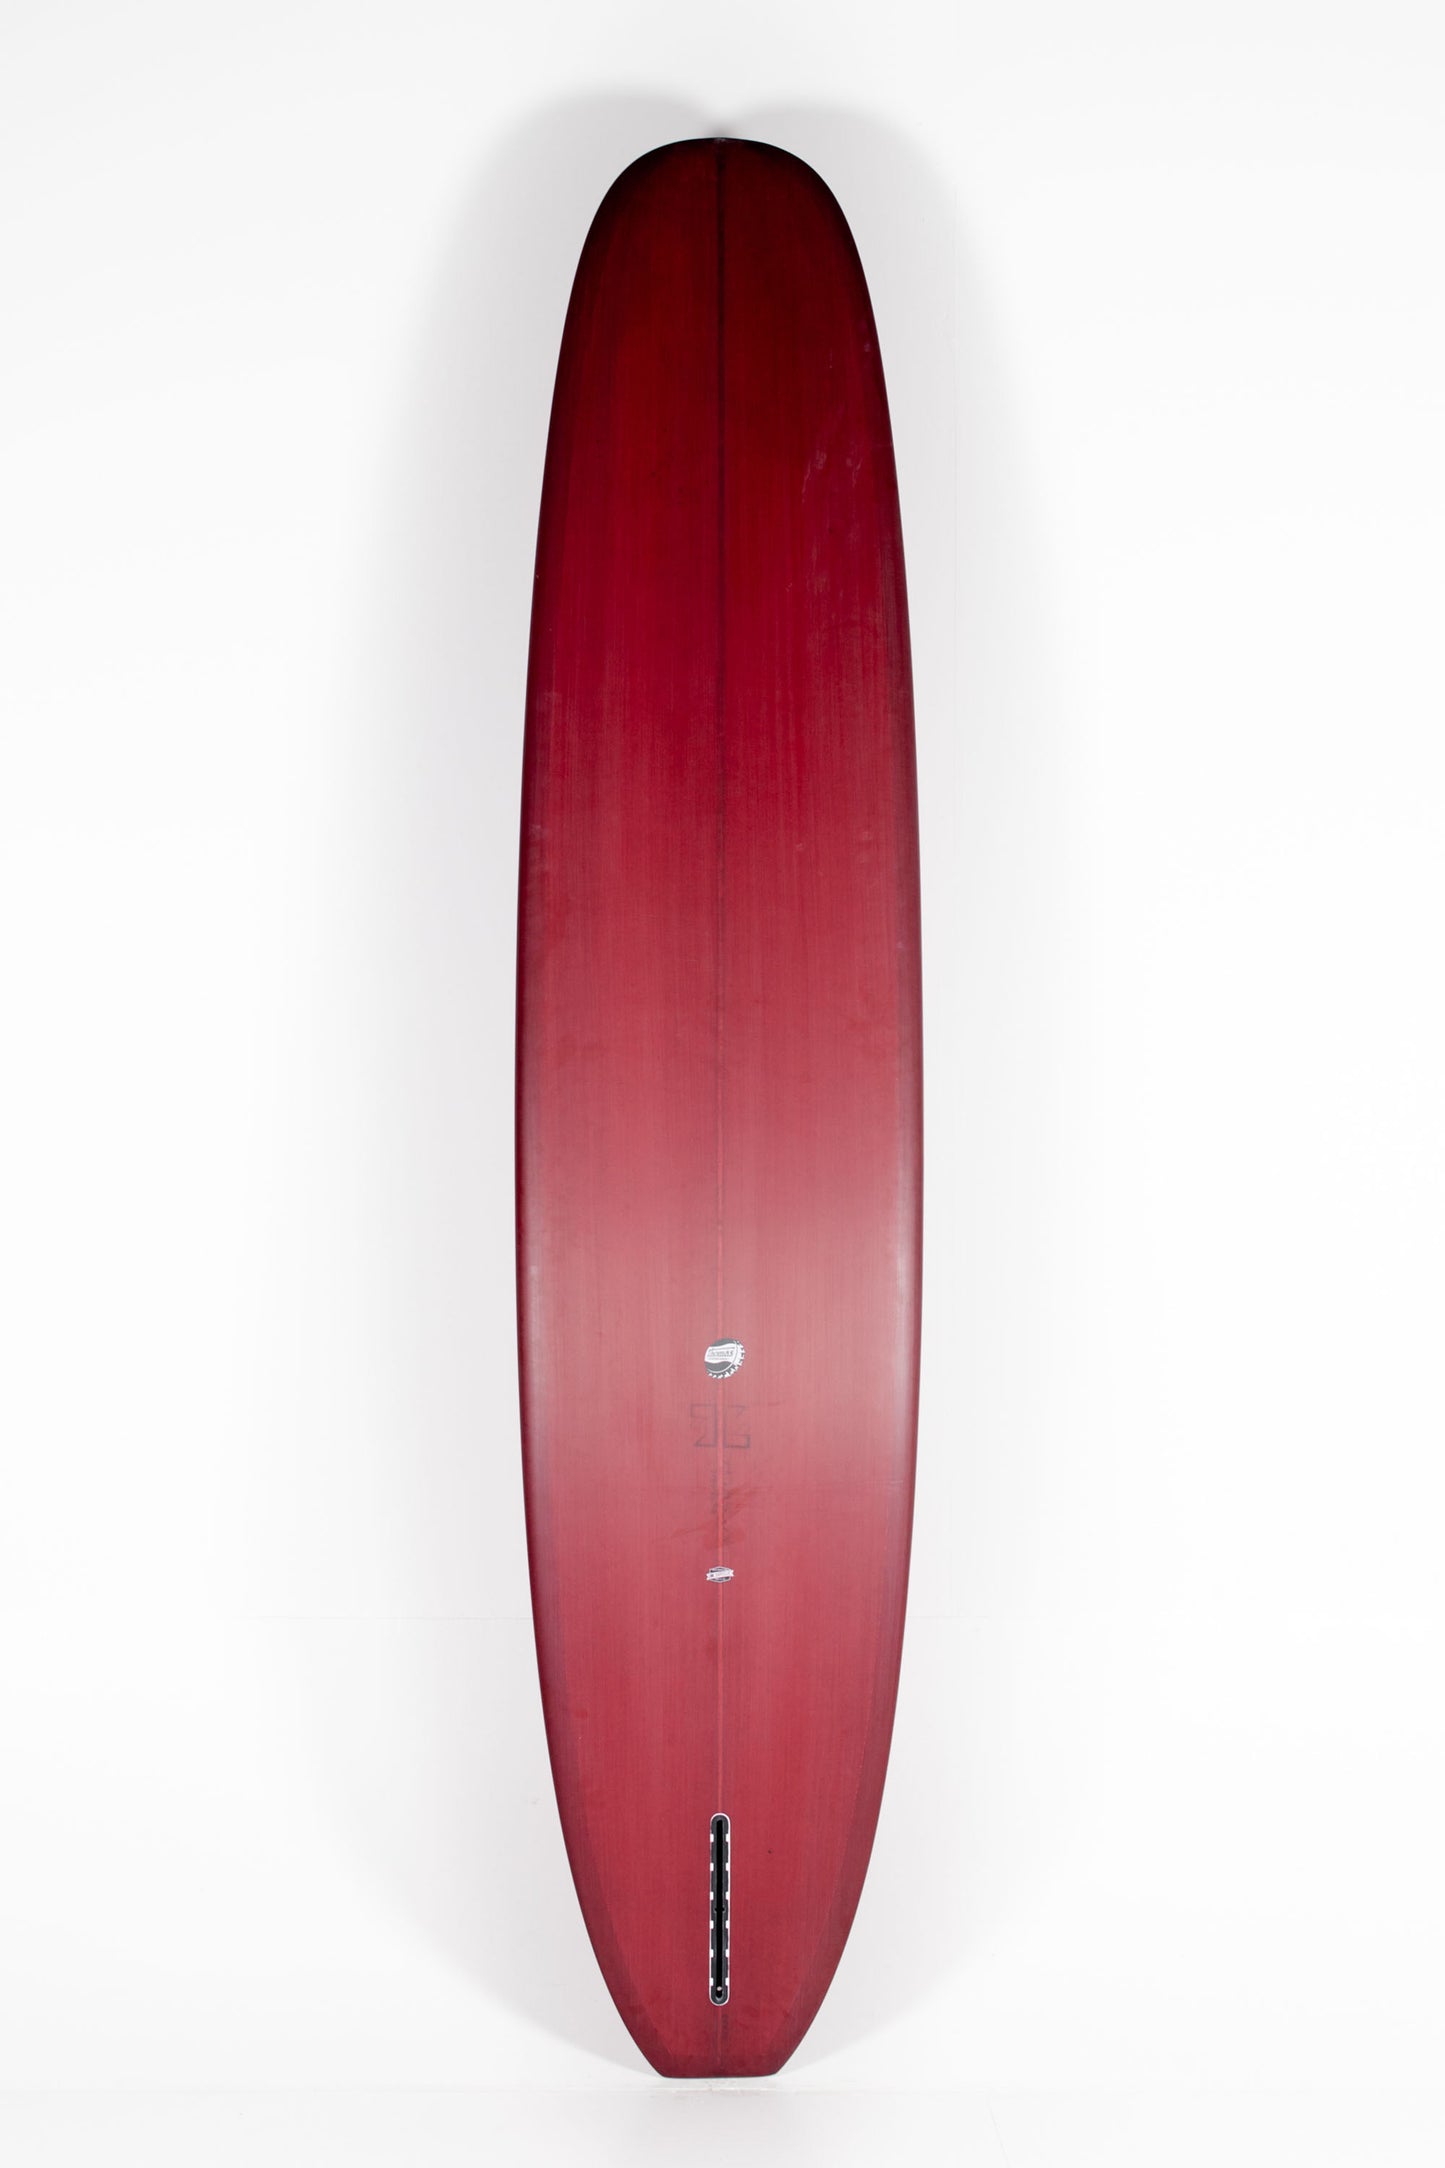 Pukas Surf Shop - Thomas Surfboards - STEP DECK - 9'2"x 22 3/4 x 2 7/8 - Ref. STEPDECK92